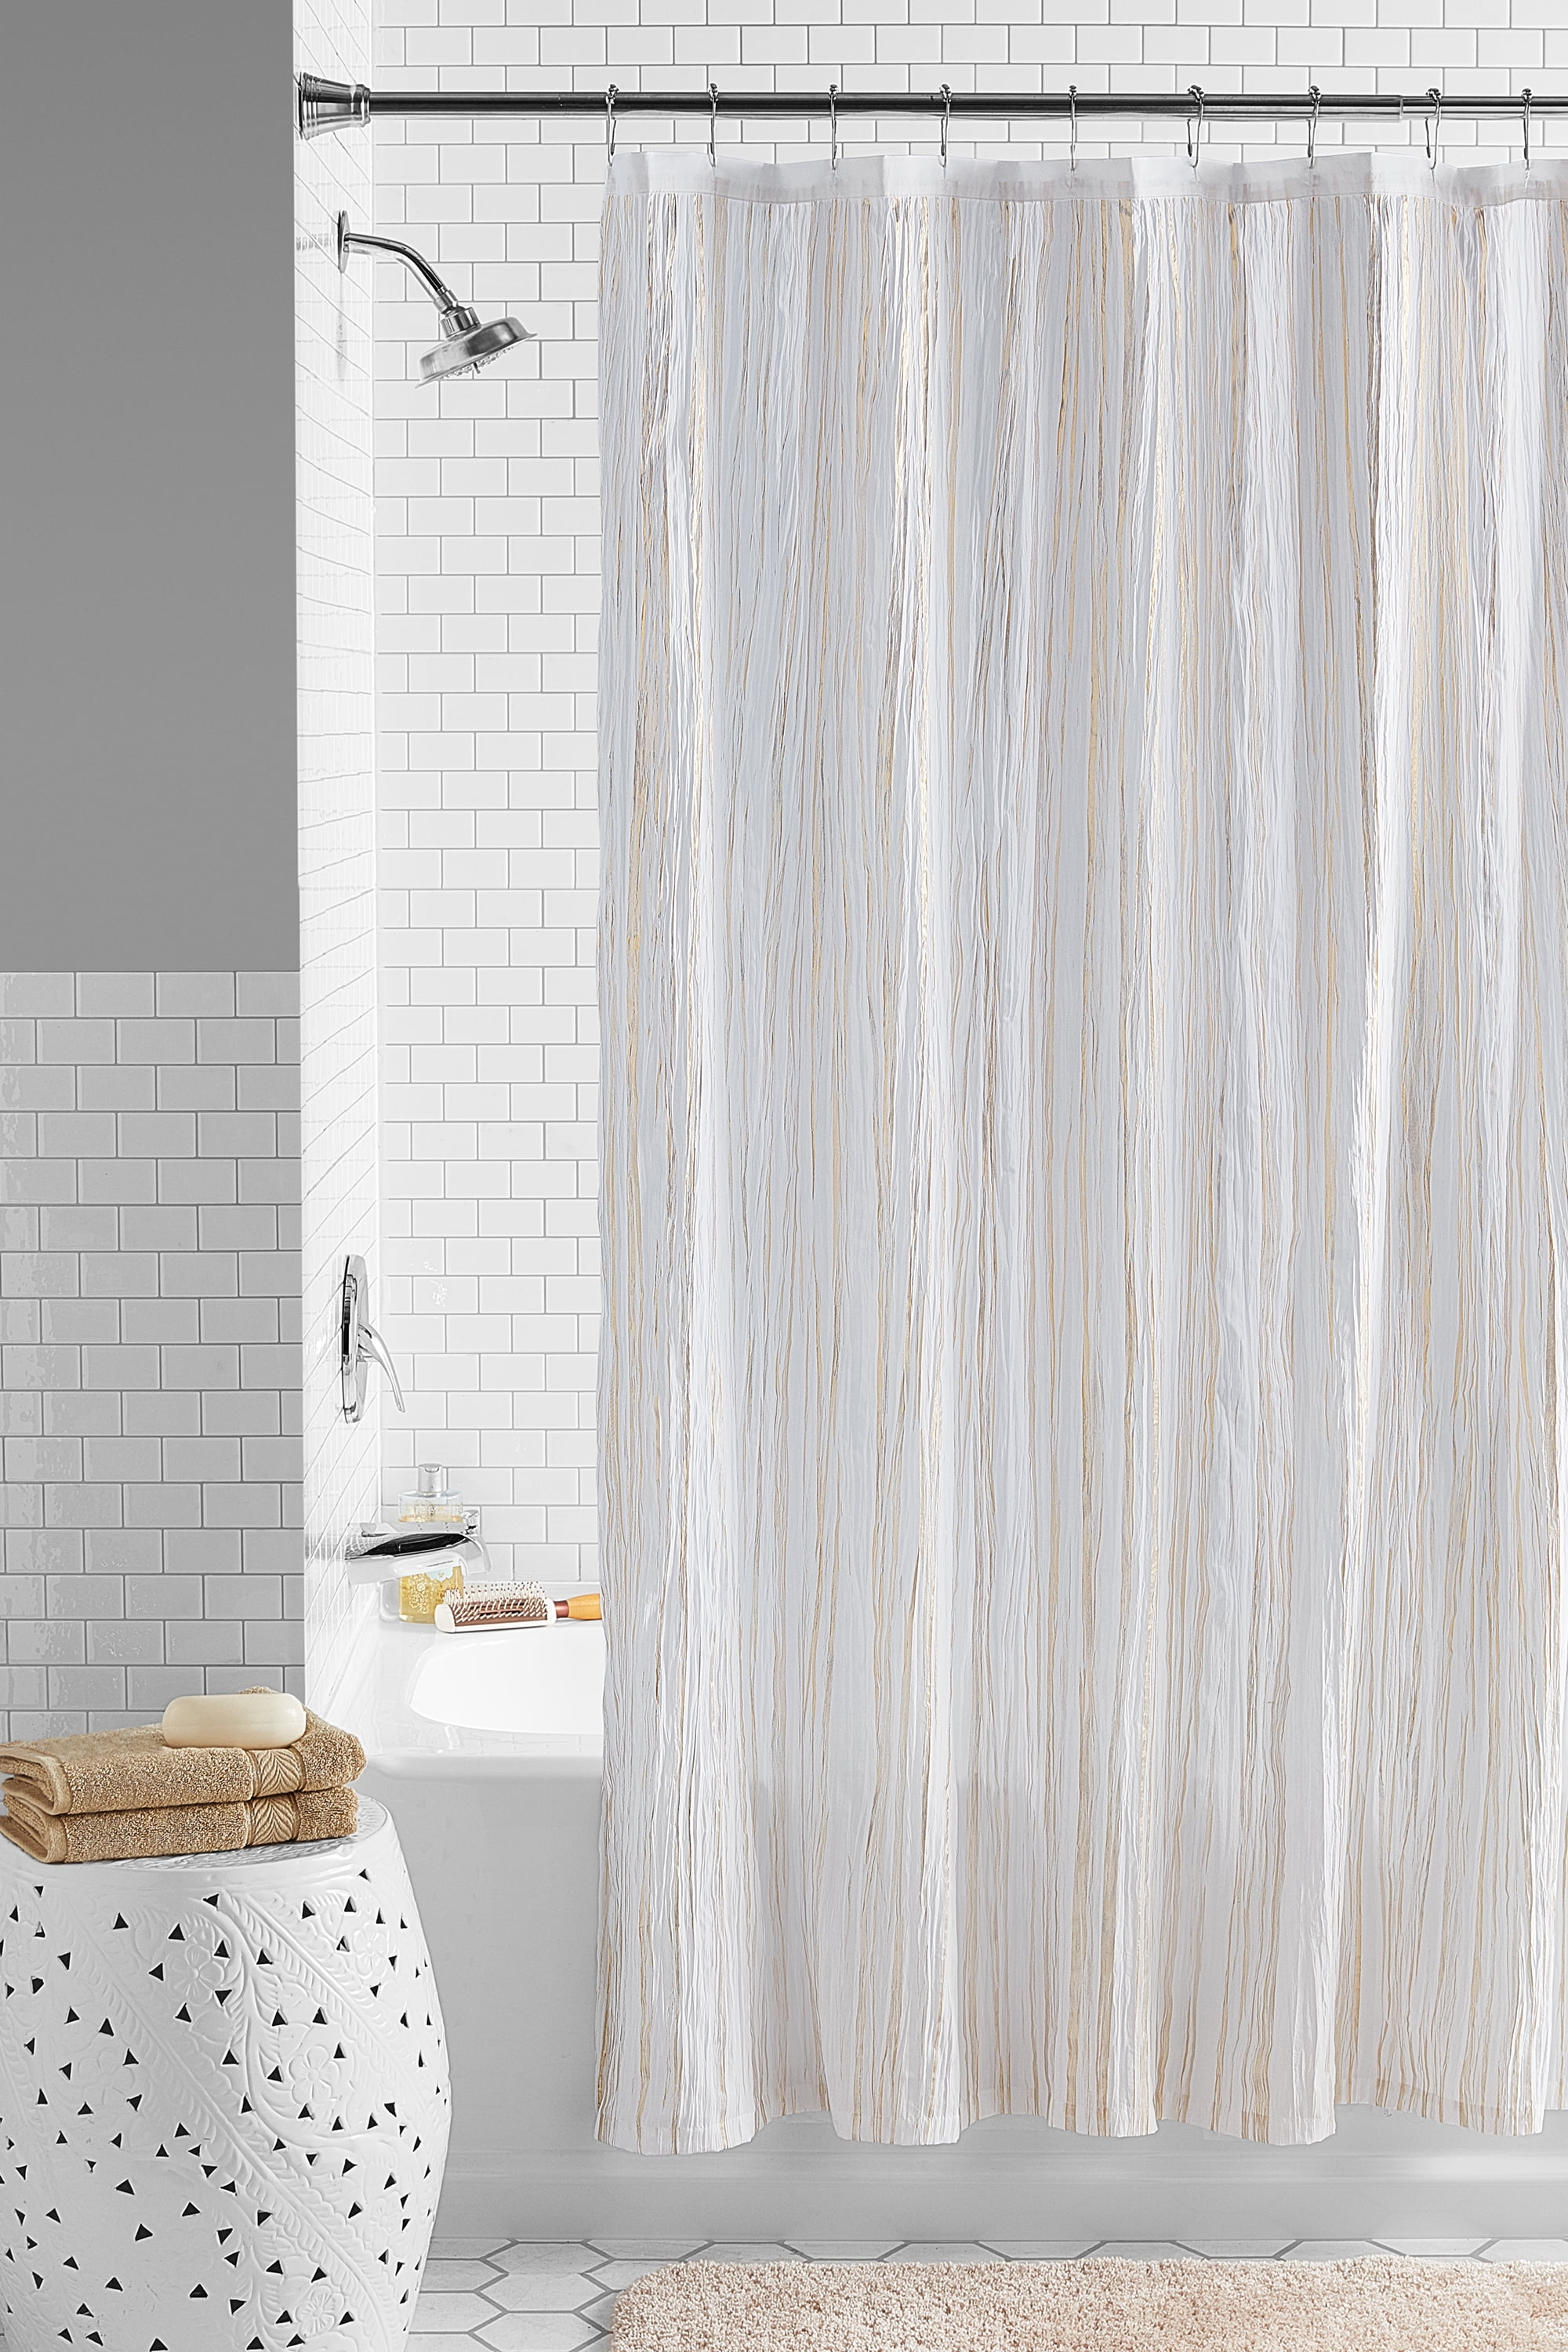 Mainstays Striped Decorative Fabric Shower Curtain, 72 x 72